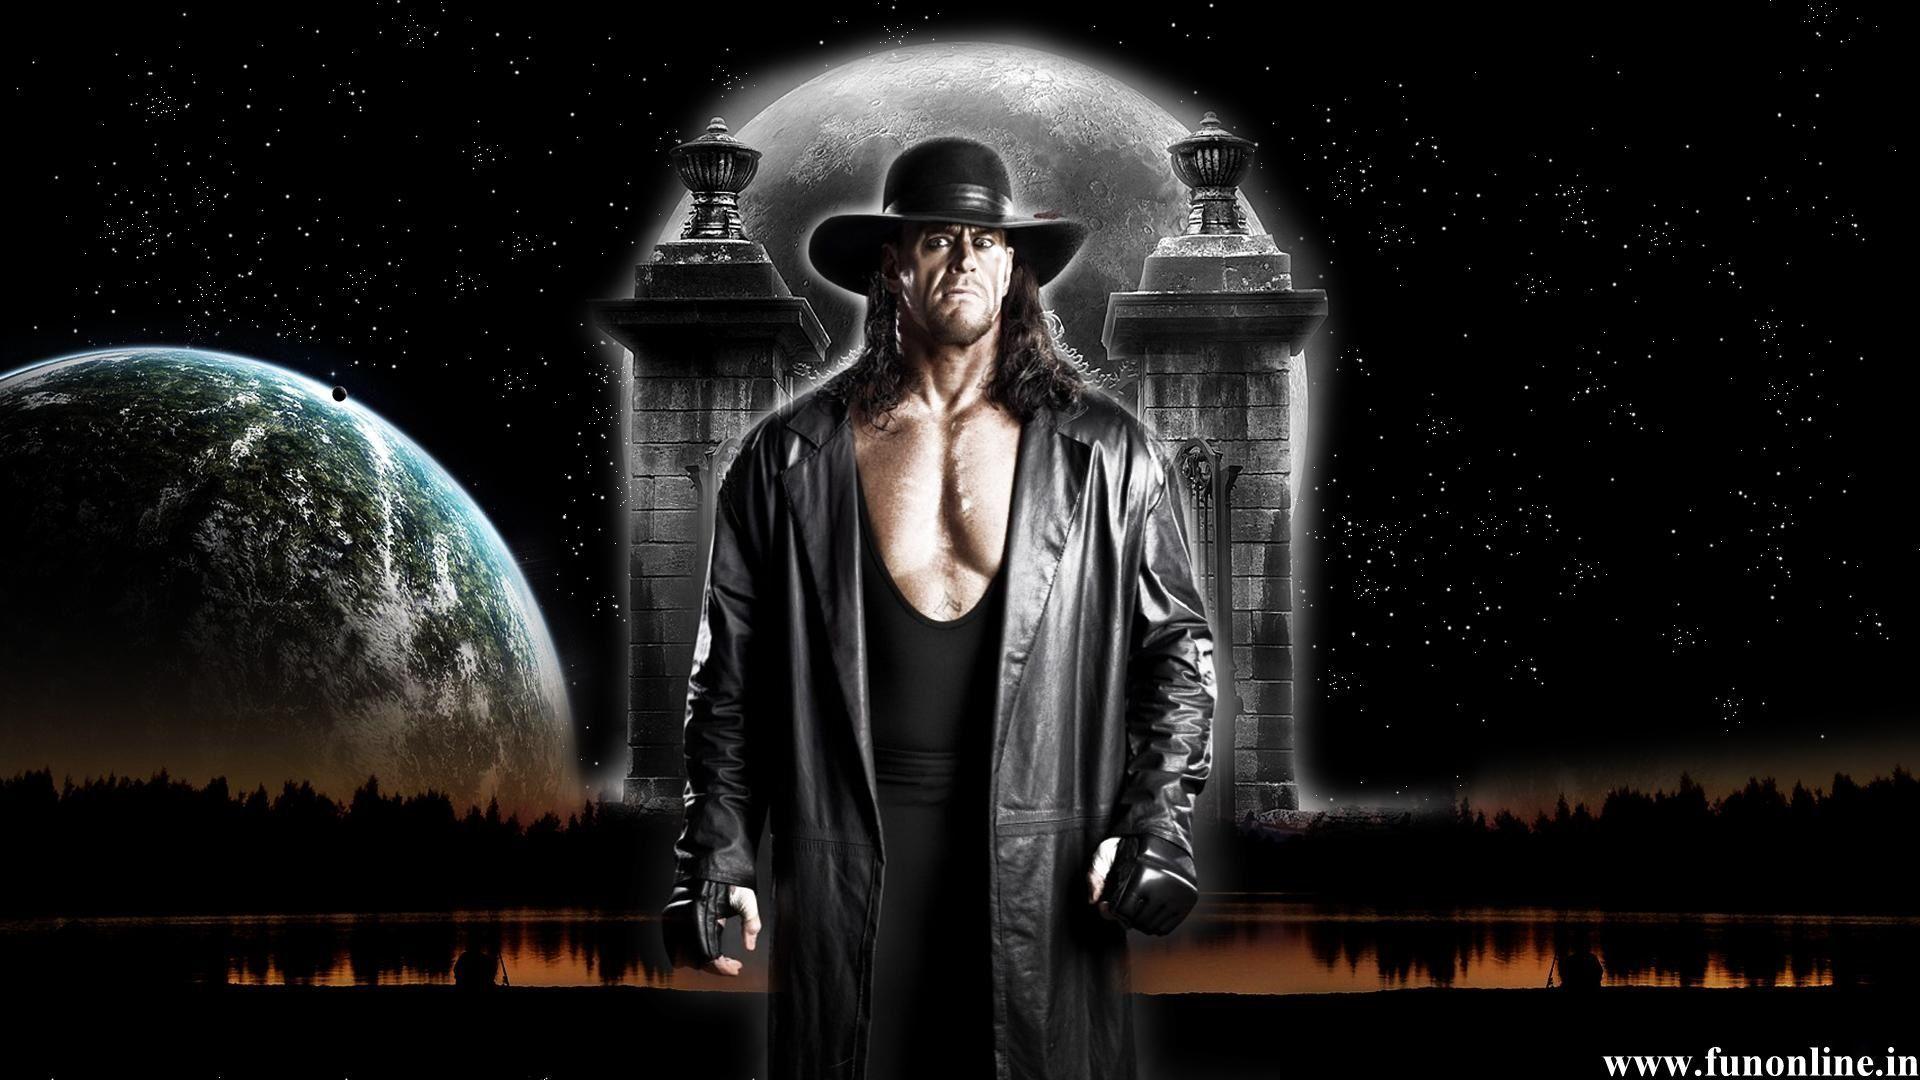 WWE Undertaker Wallpaper. WWE Legendary Superstar The Undertaker